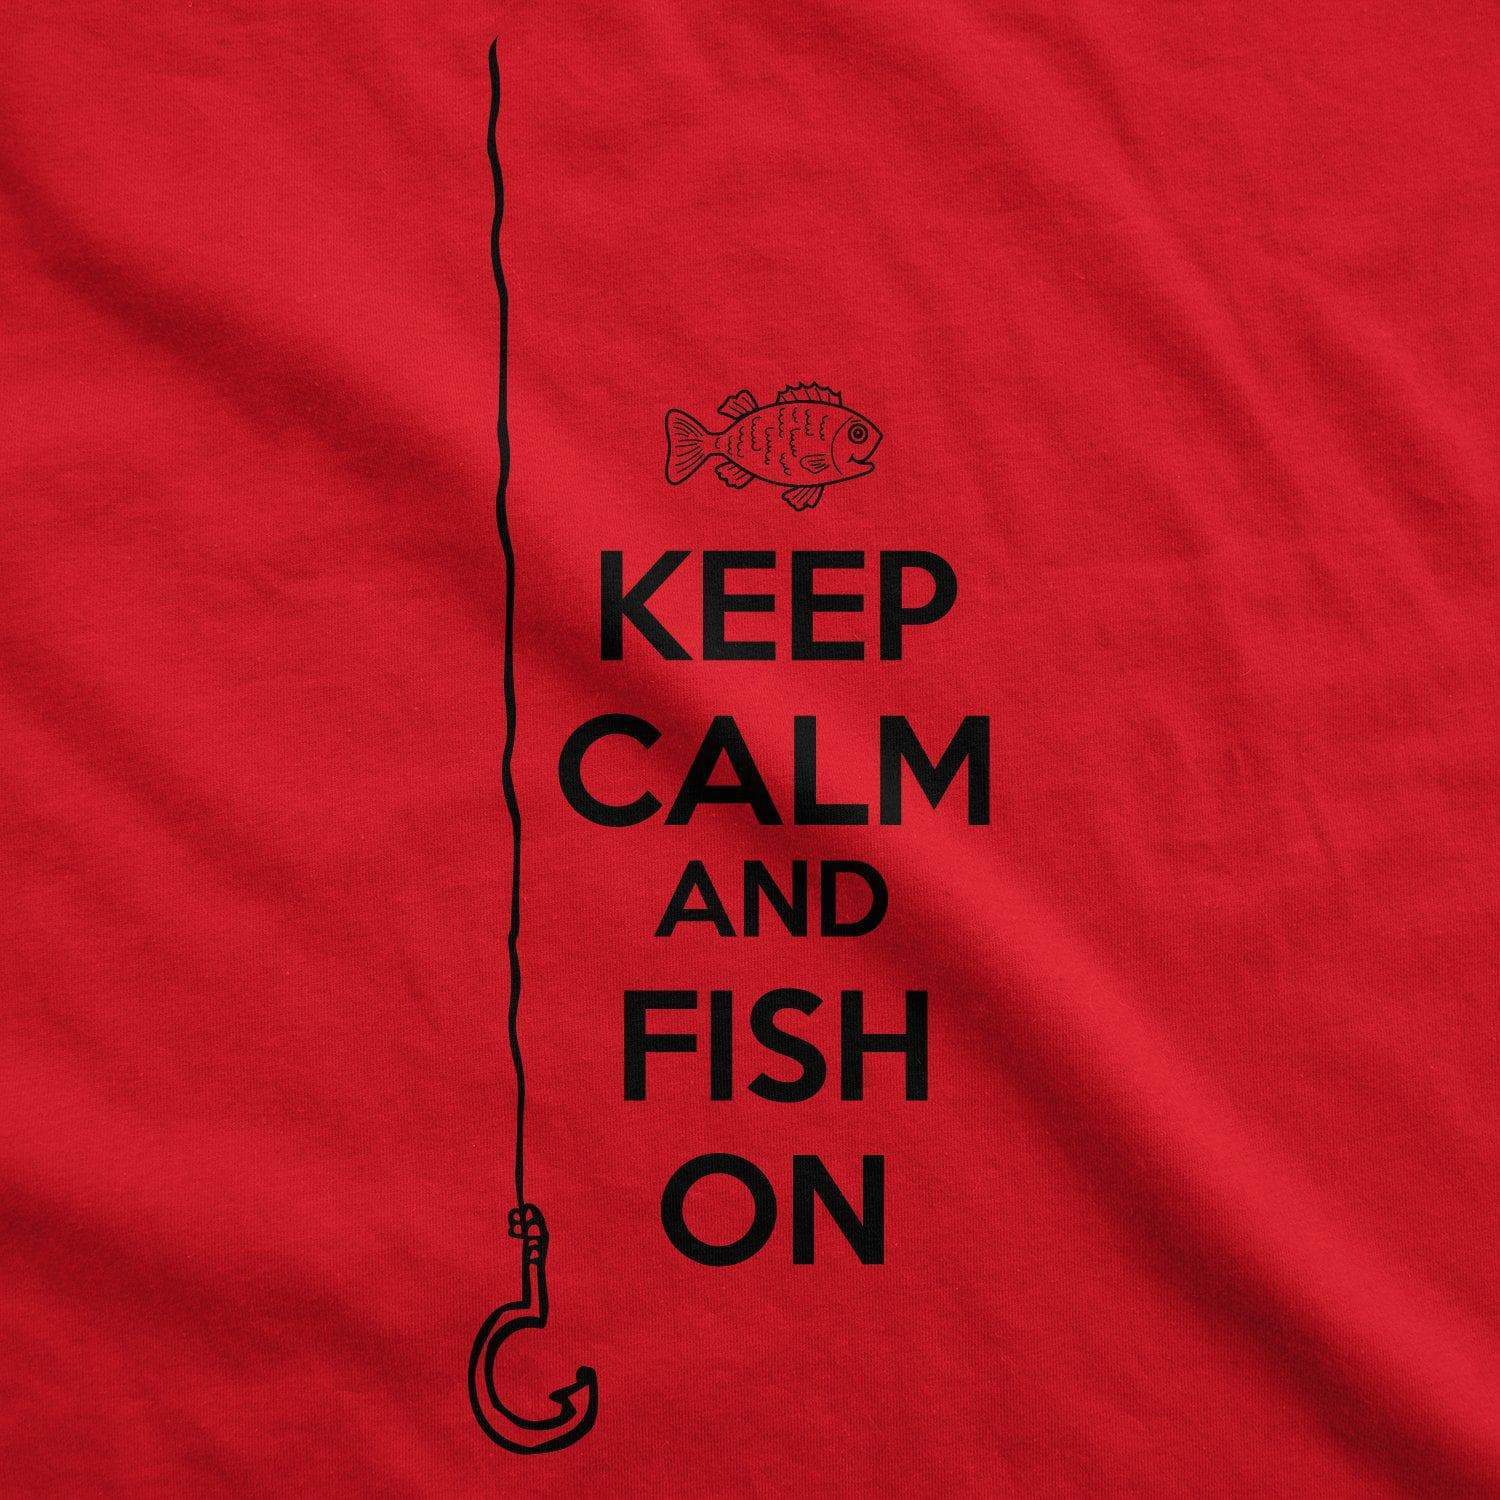 Keep Calm And Fish On Men's Tshirt - Crazy Dog T-Shirts